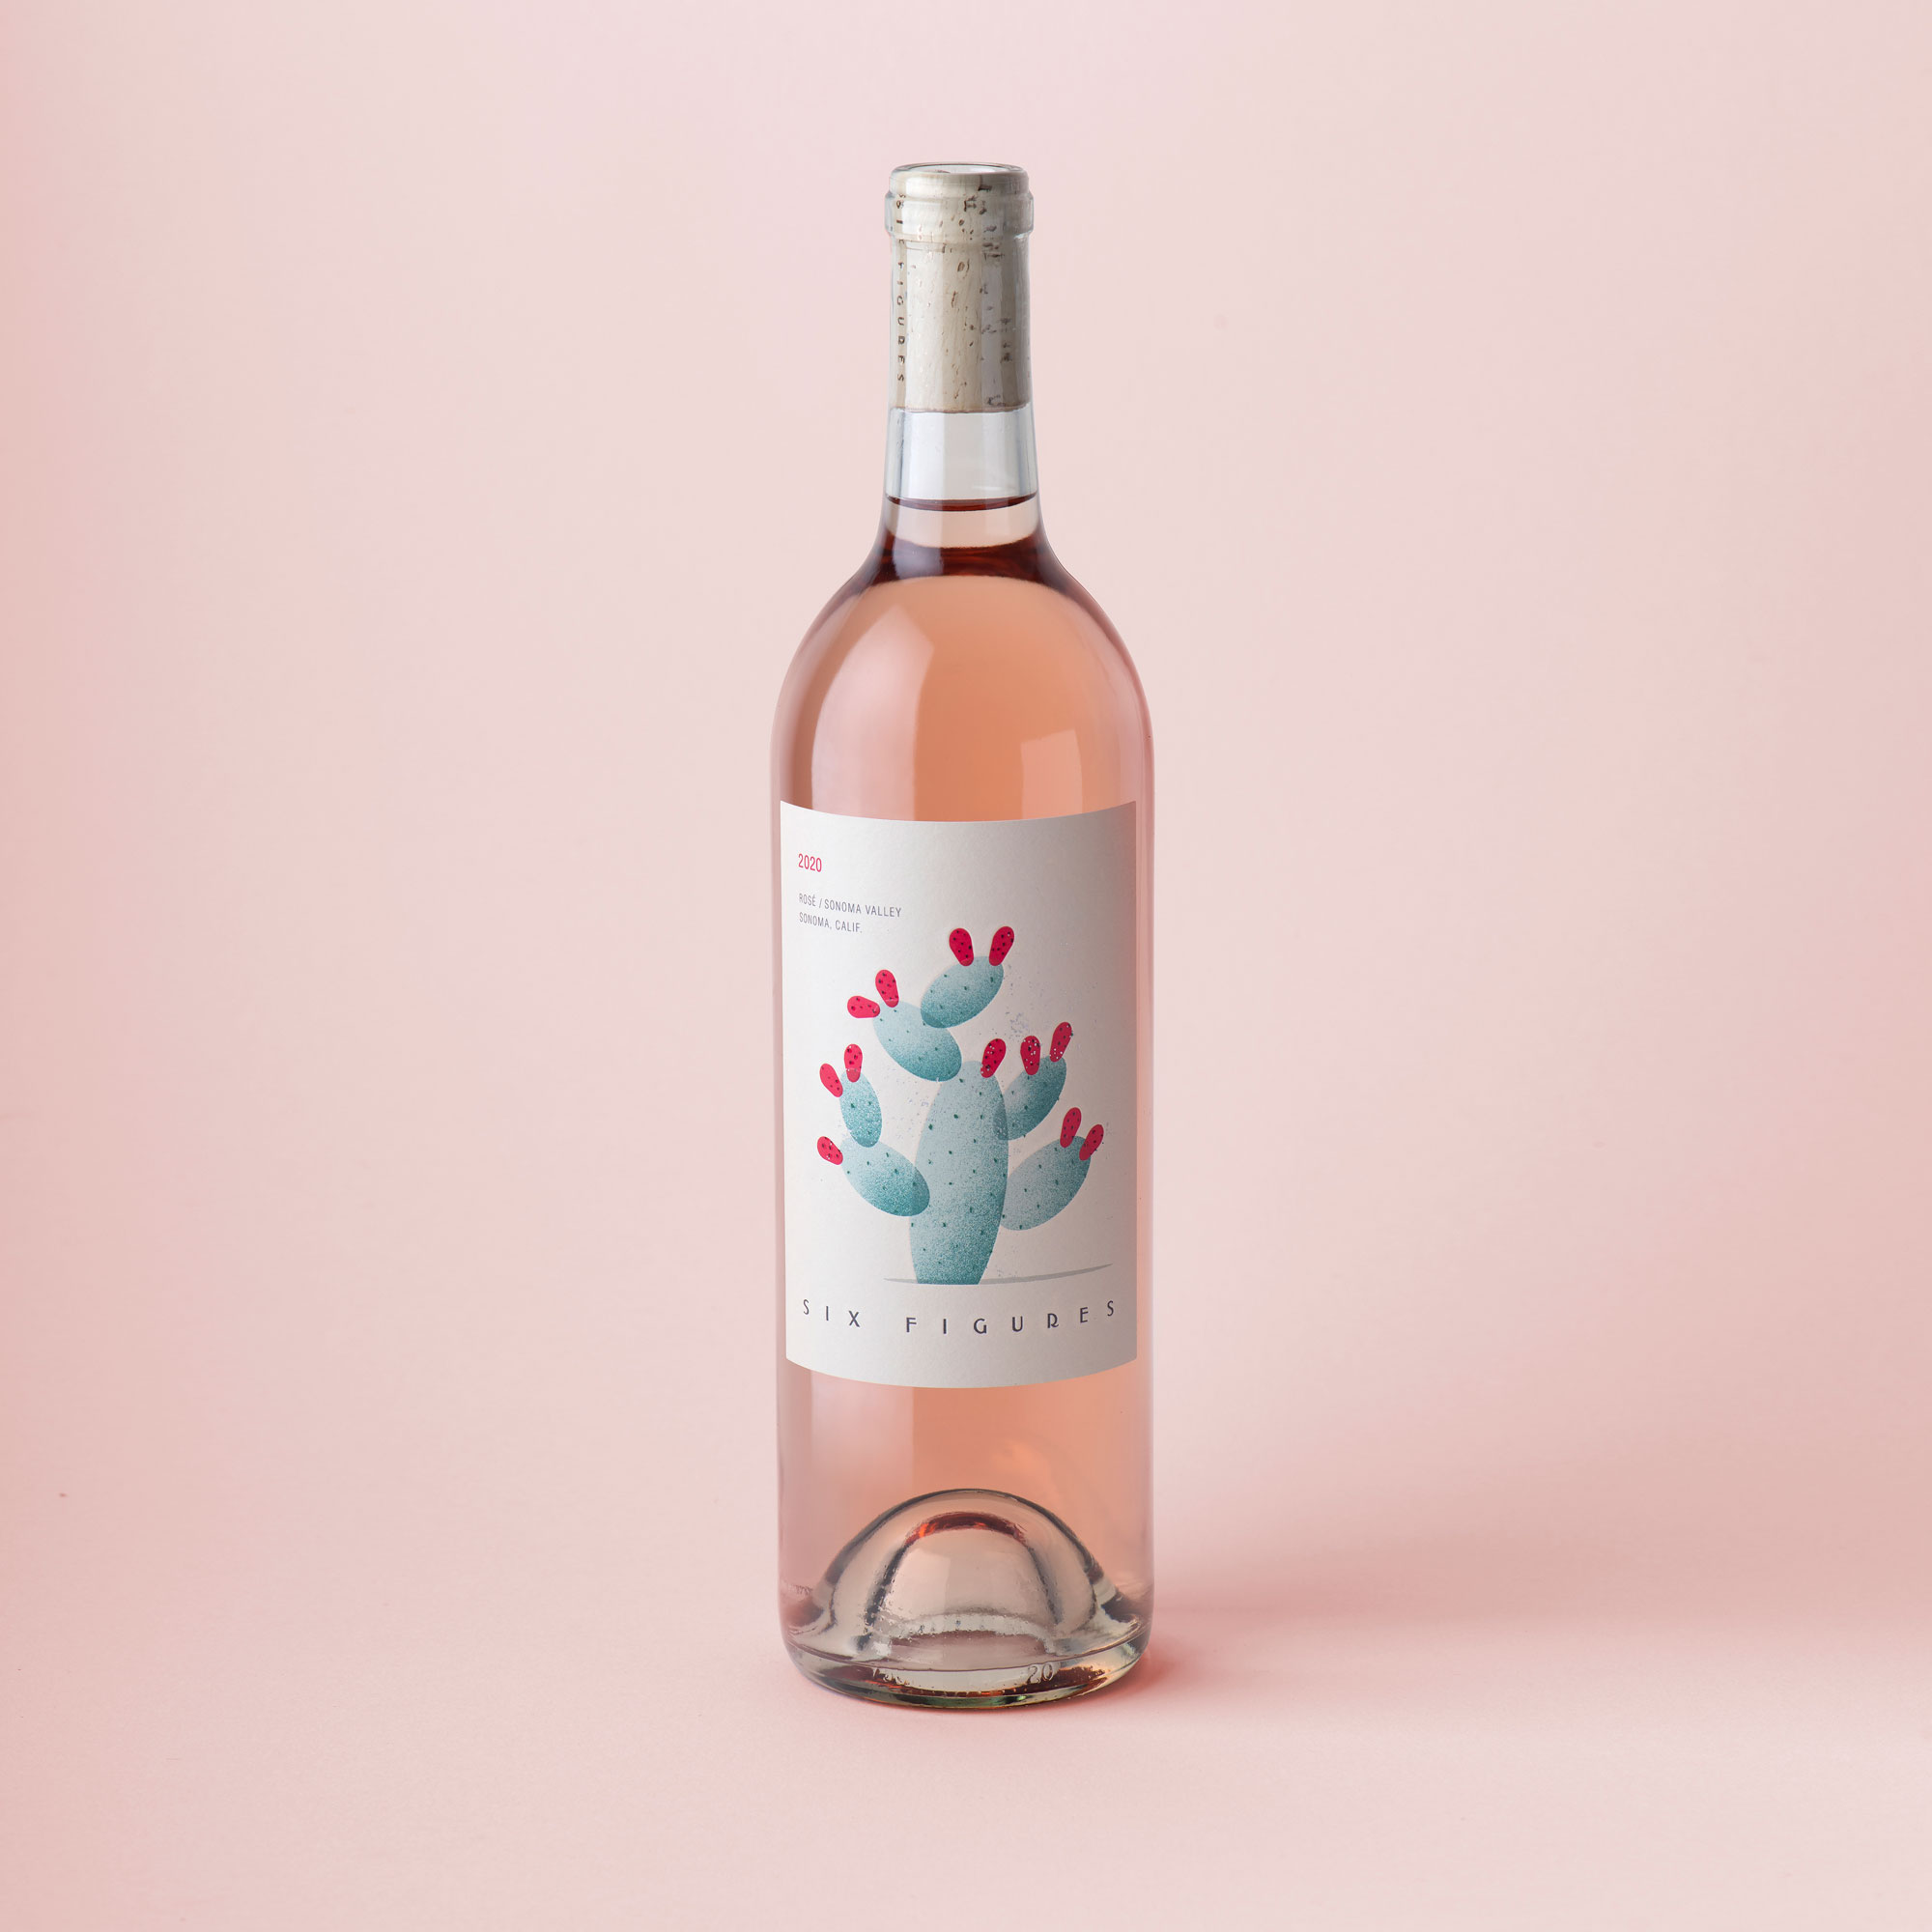 A bottle of Six Figures 2020 Rosé wine.